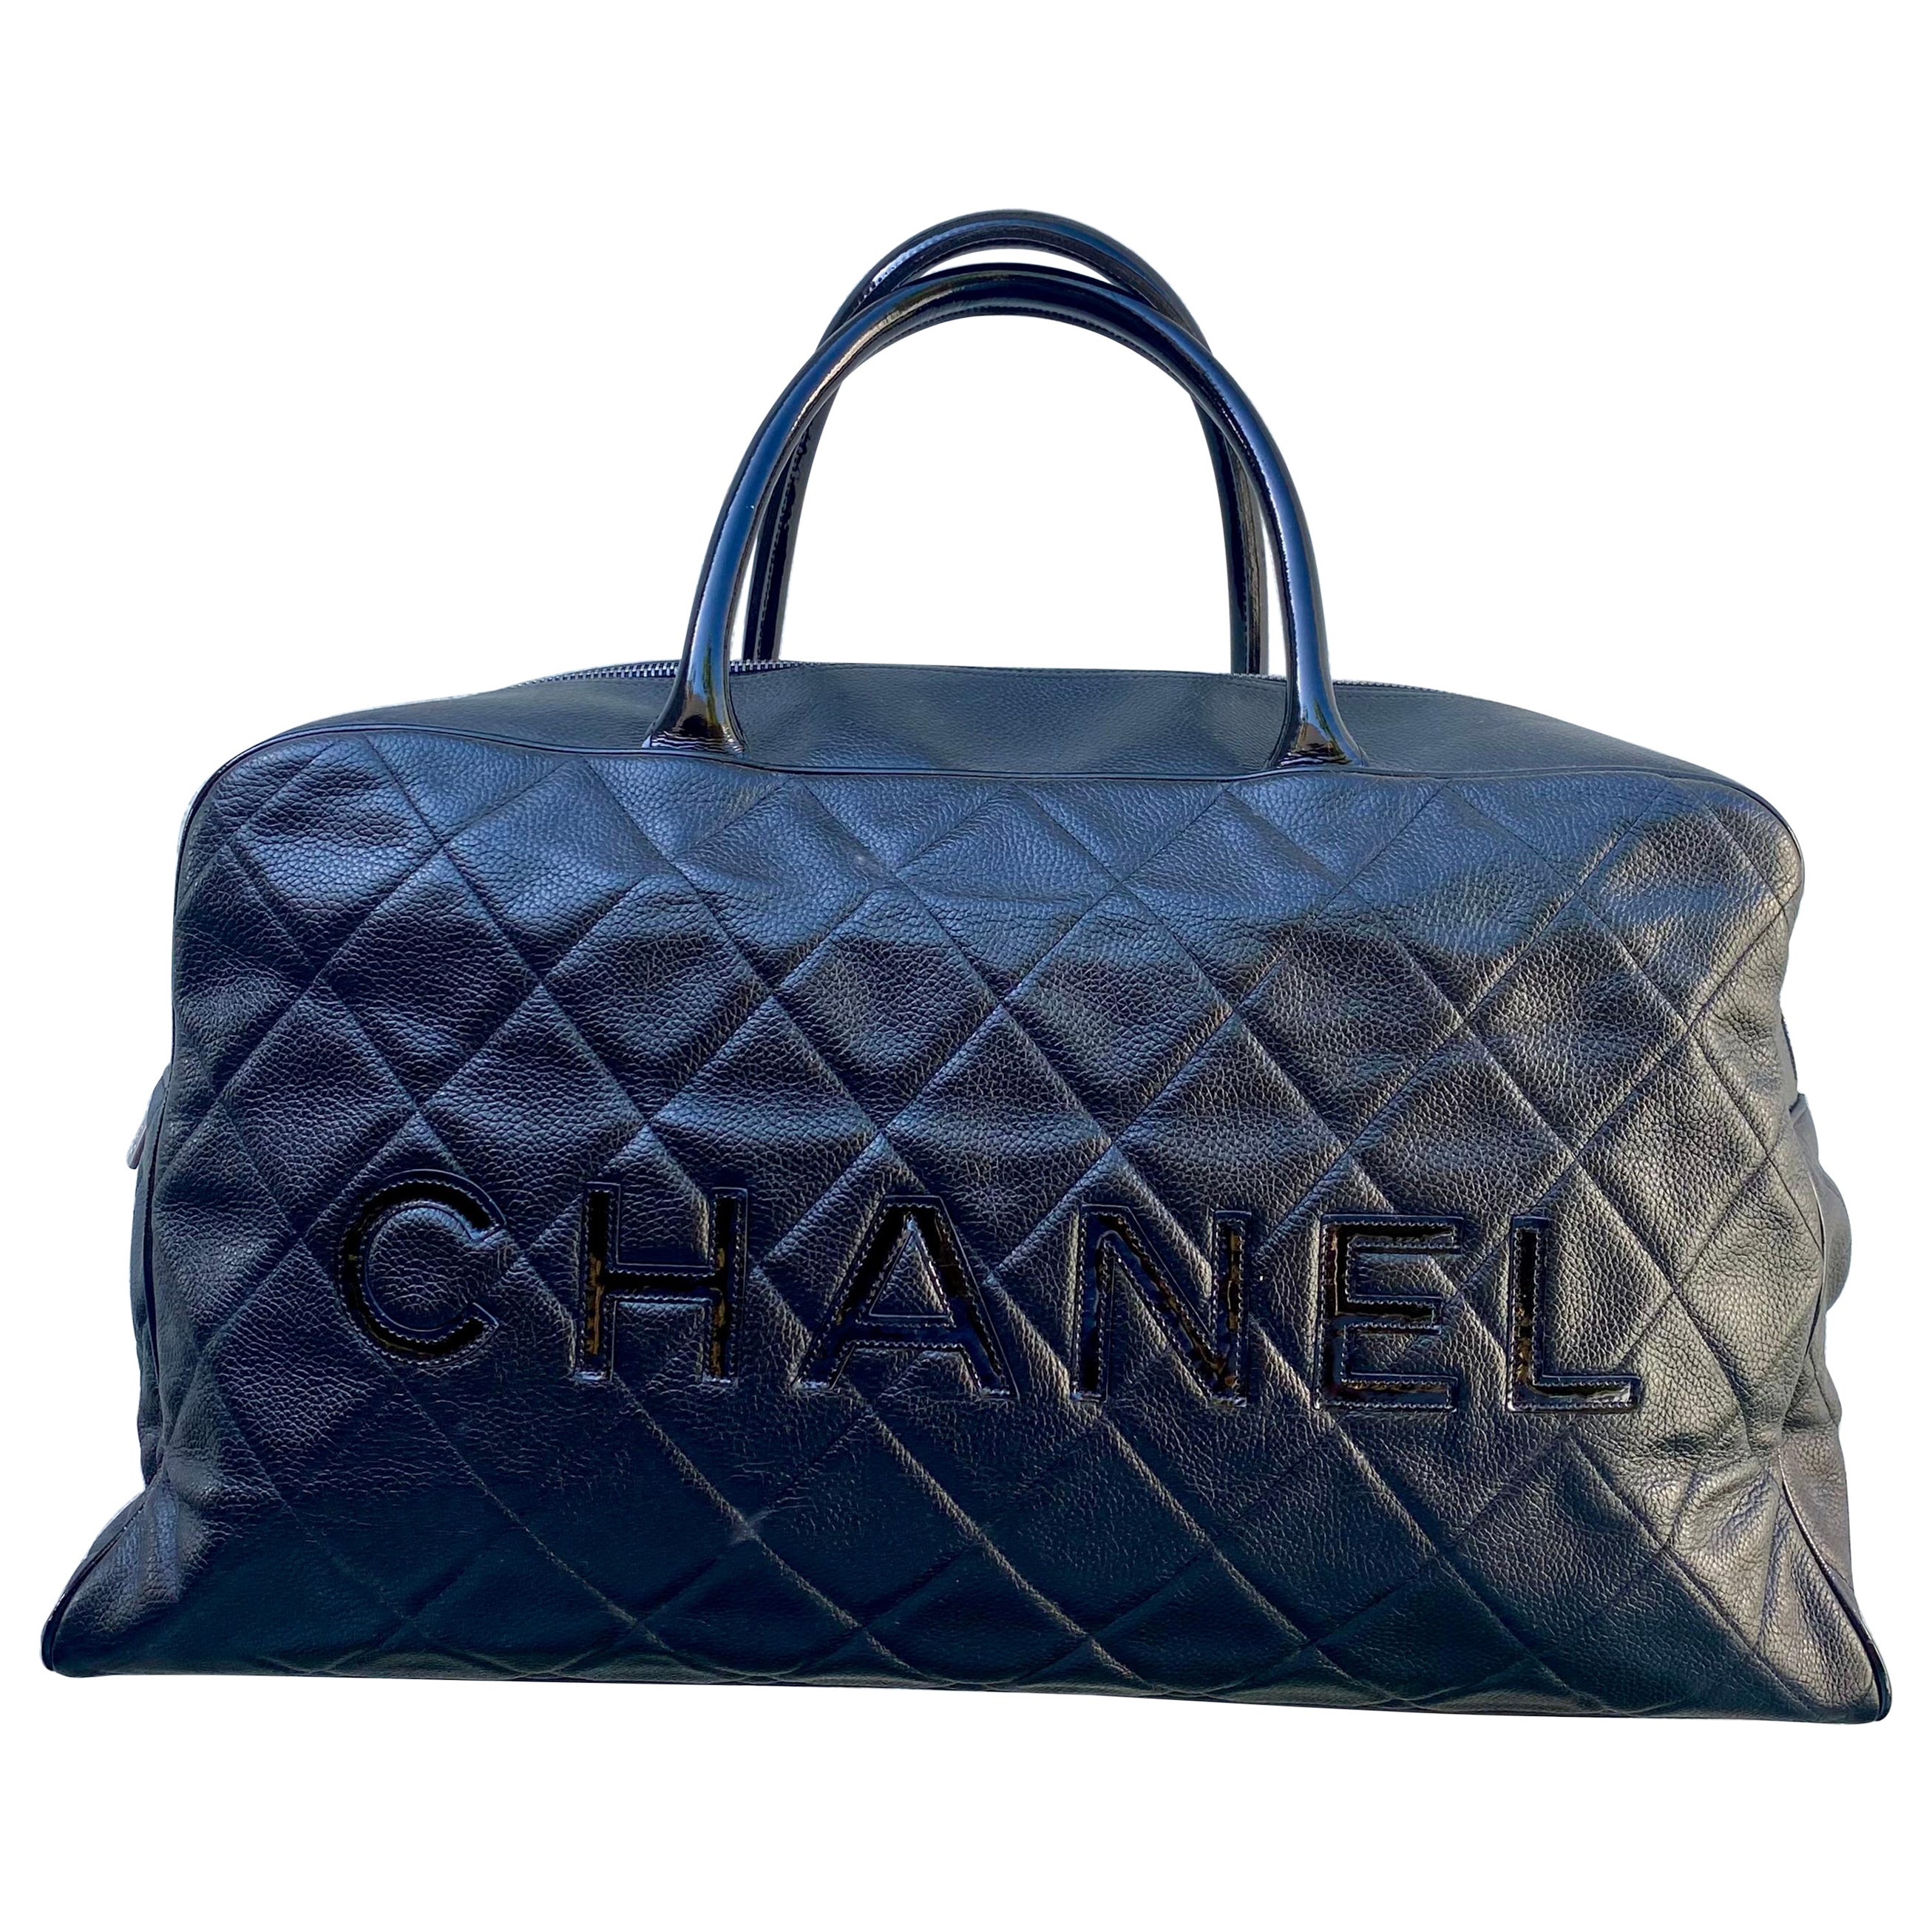 Chanel Rare Vintage Black Caviar Weekender Travel Duffle Shopper Bag For Sale